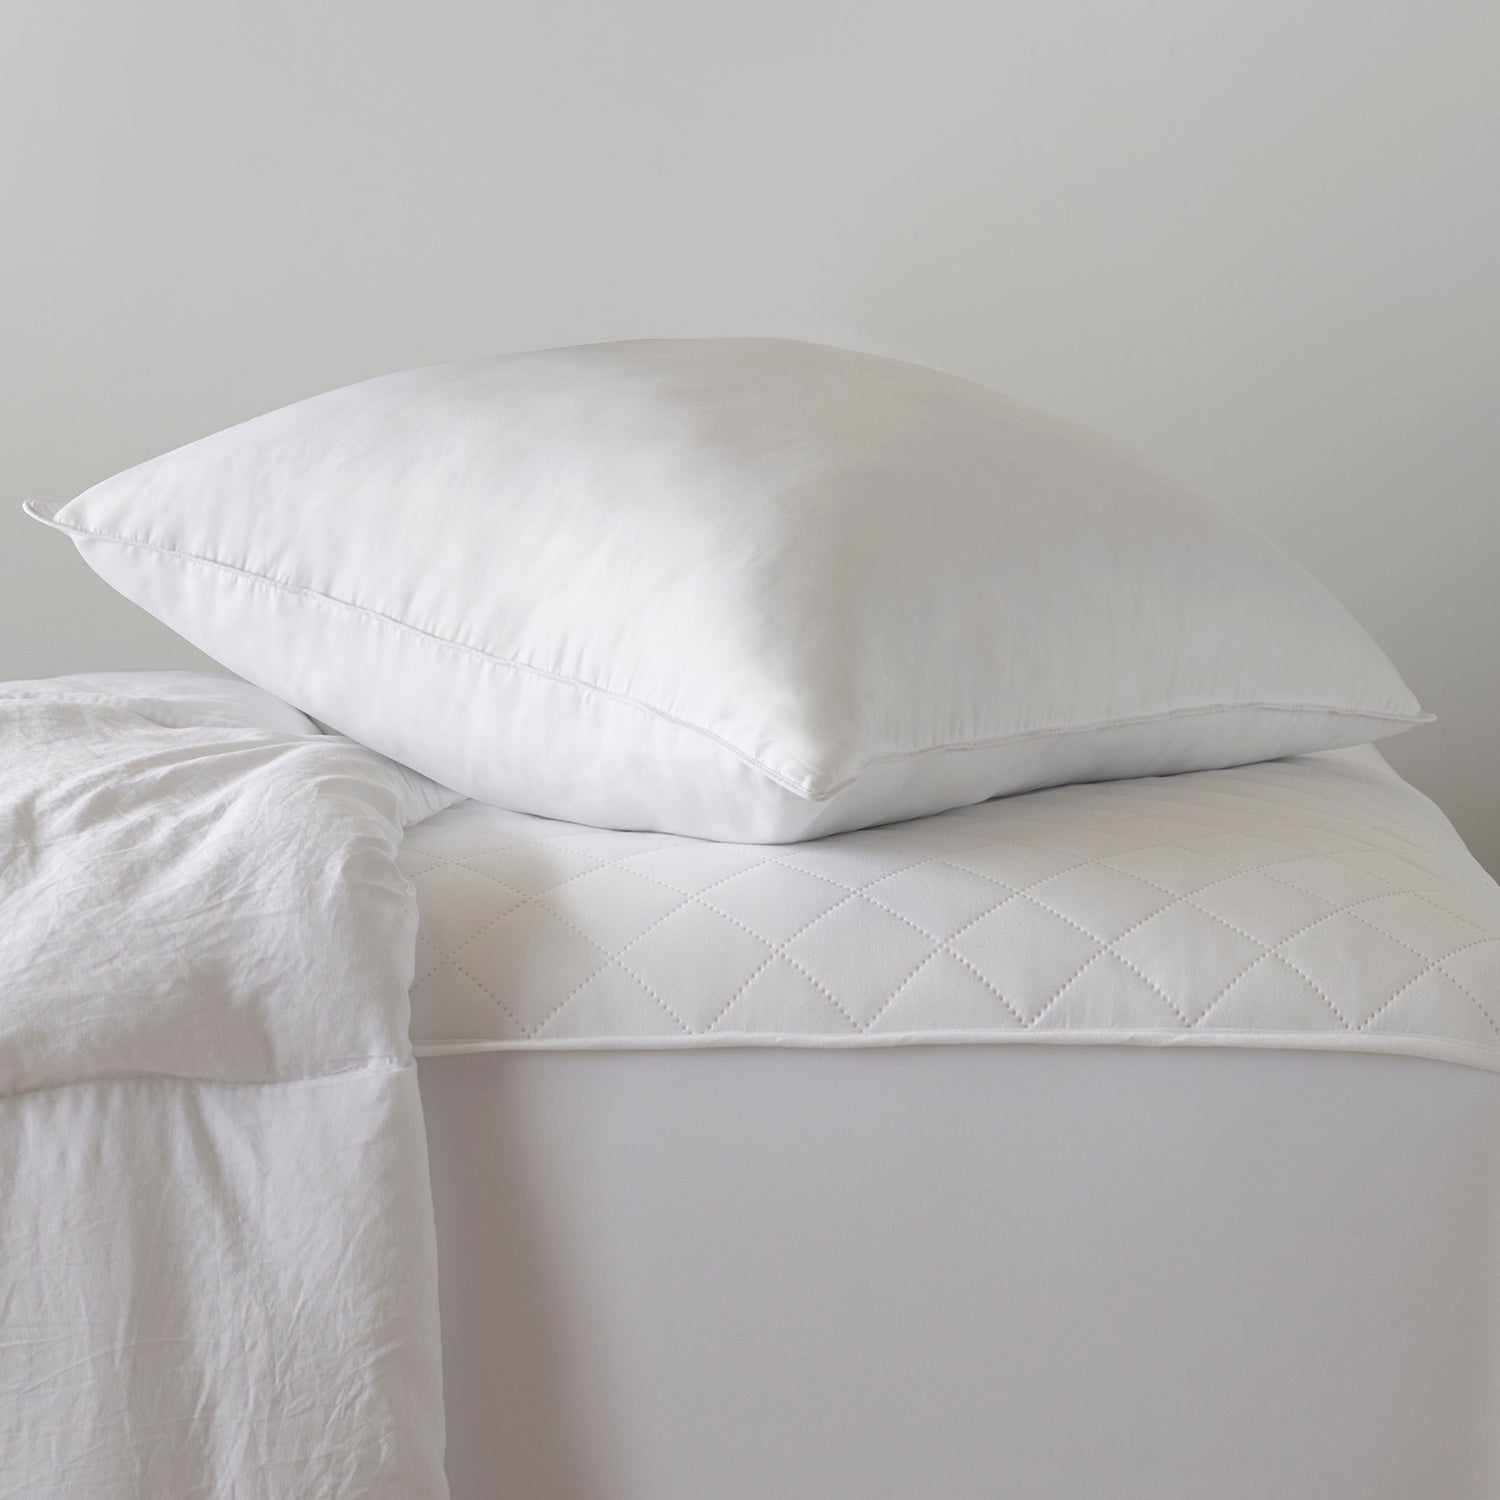 All Sleeper Allergy & Dust Mite Resistant Luxury MEMORY FIBER Pillow